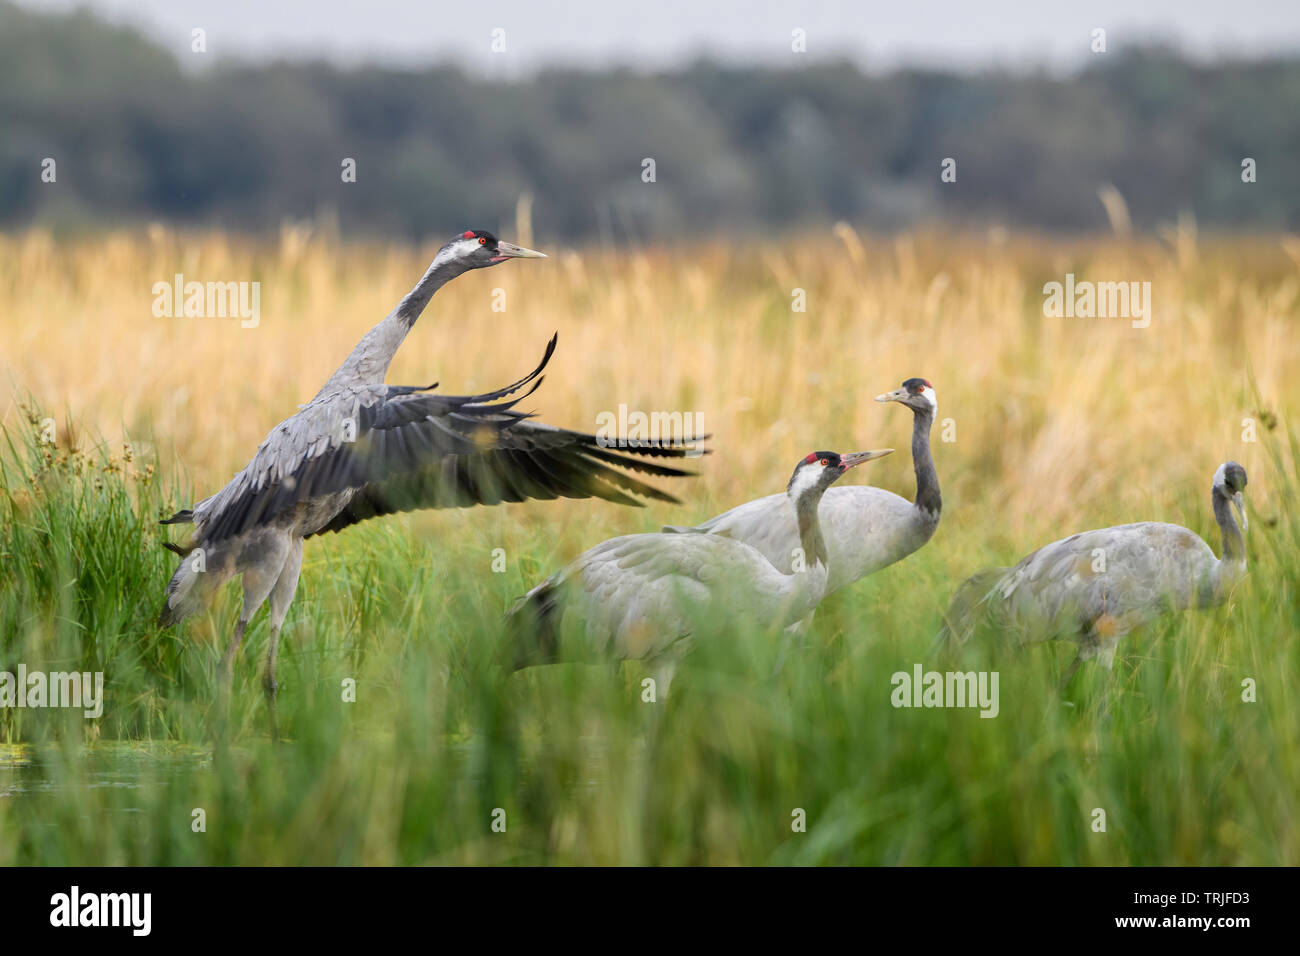 Common Crane - Grus grus, beautiful large bird from Euroasian fields and meadows, Hortobagy National Park, Hungary. Stock Photo